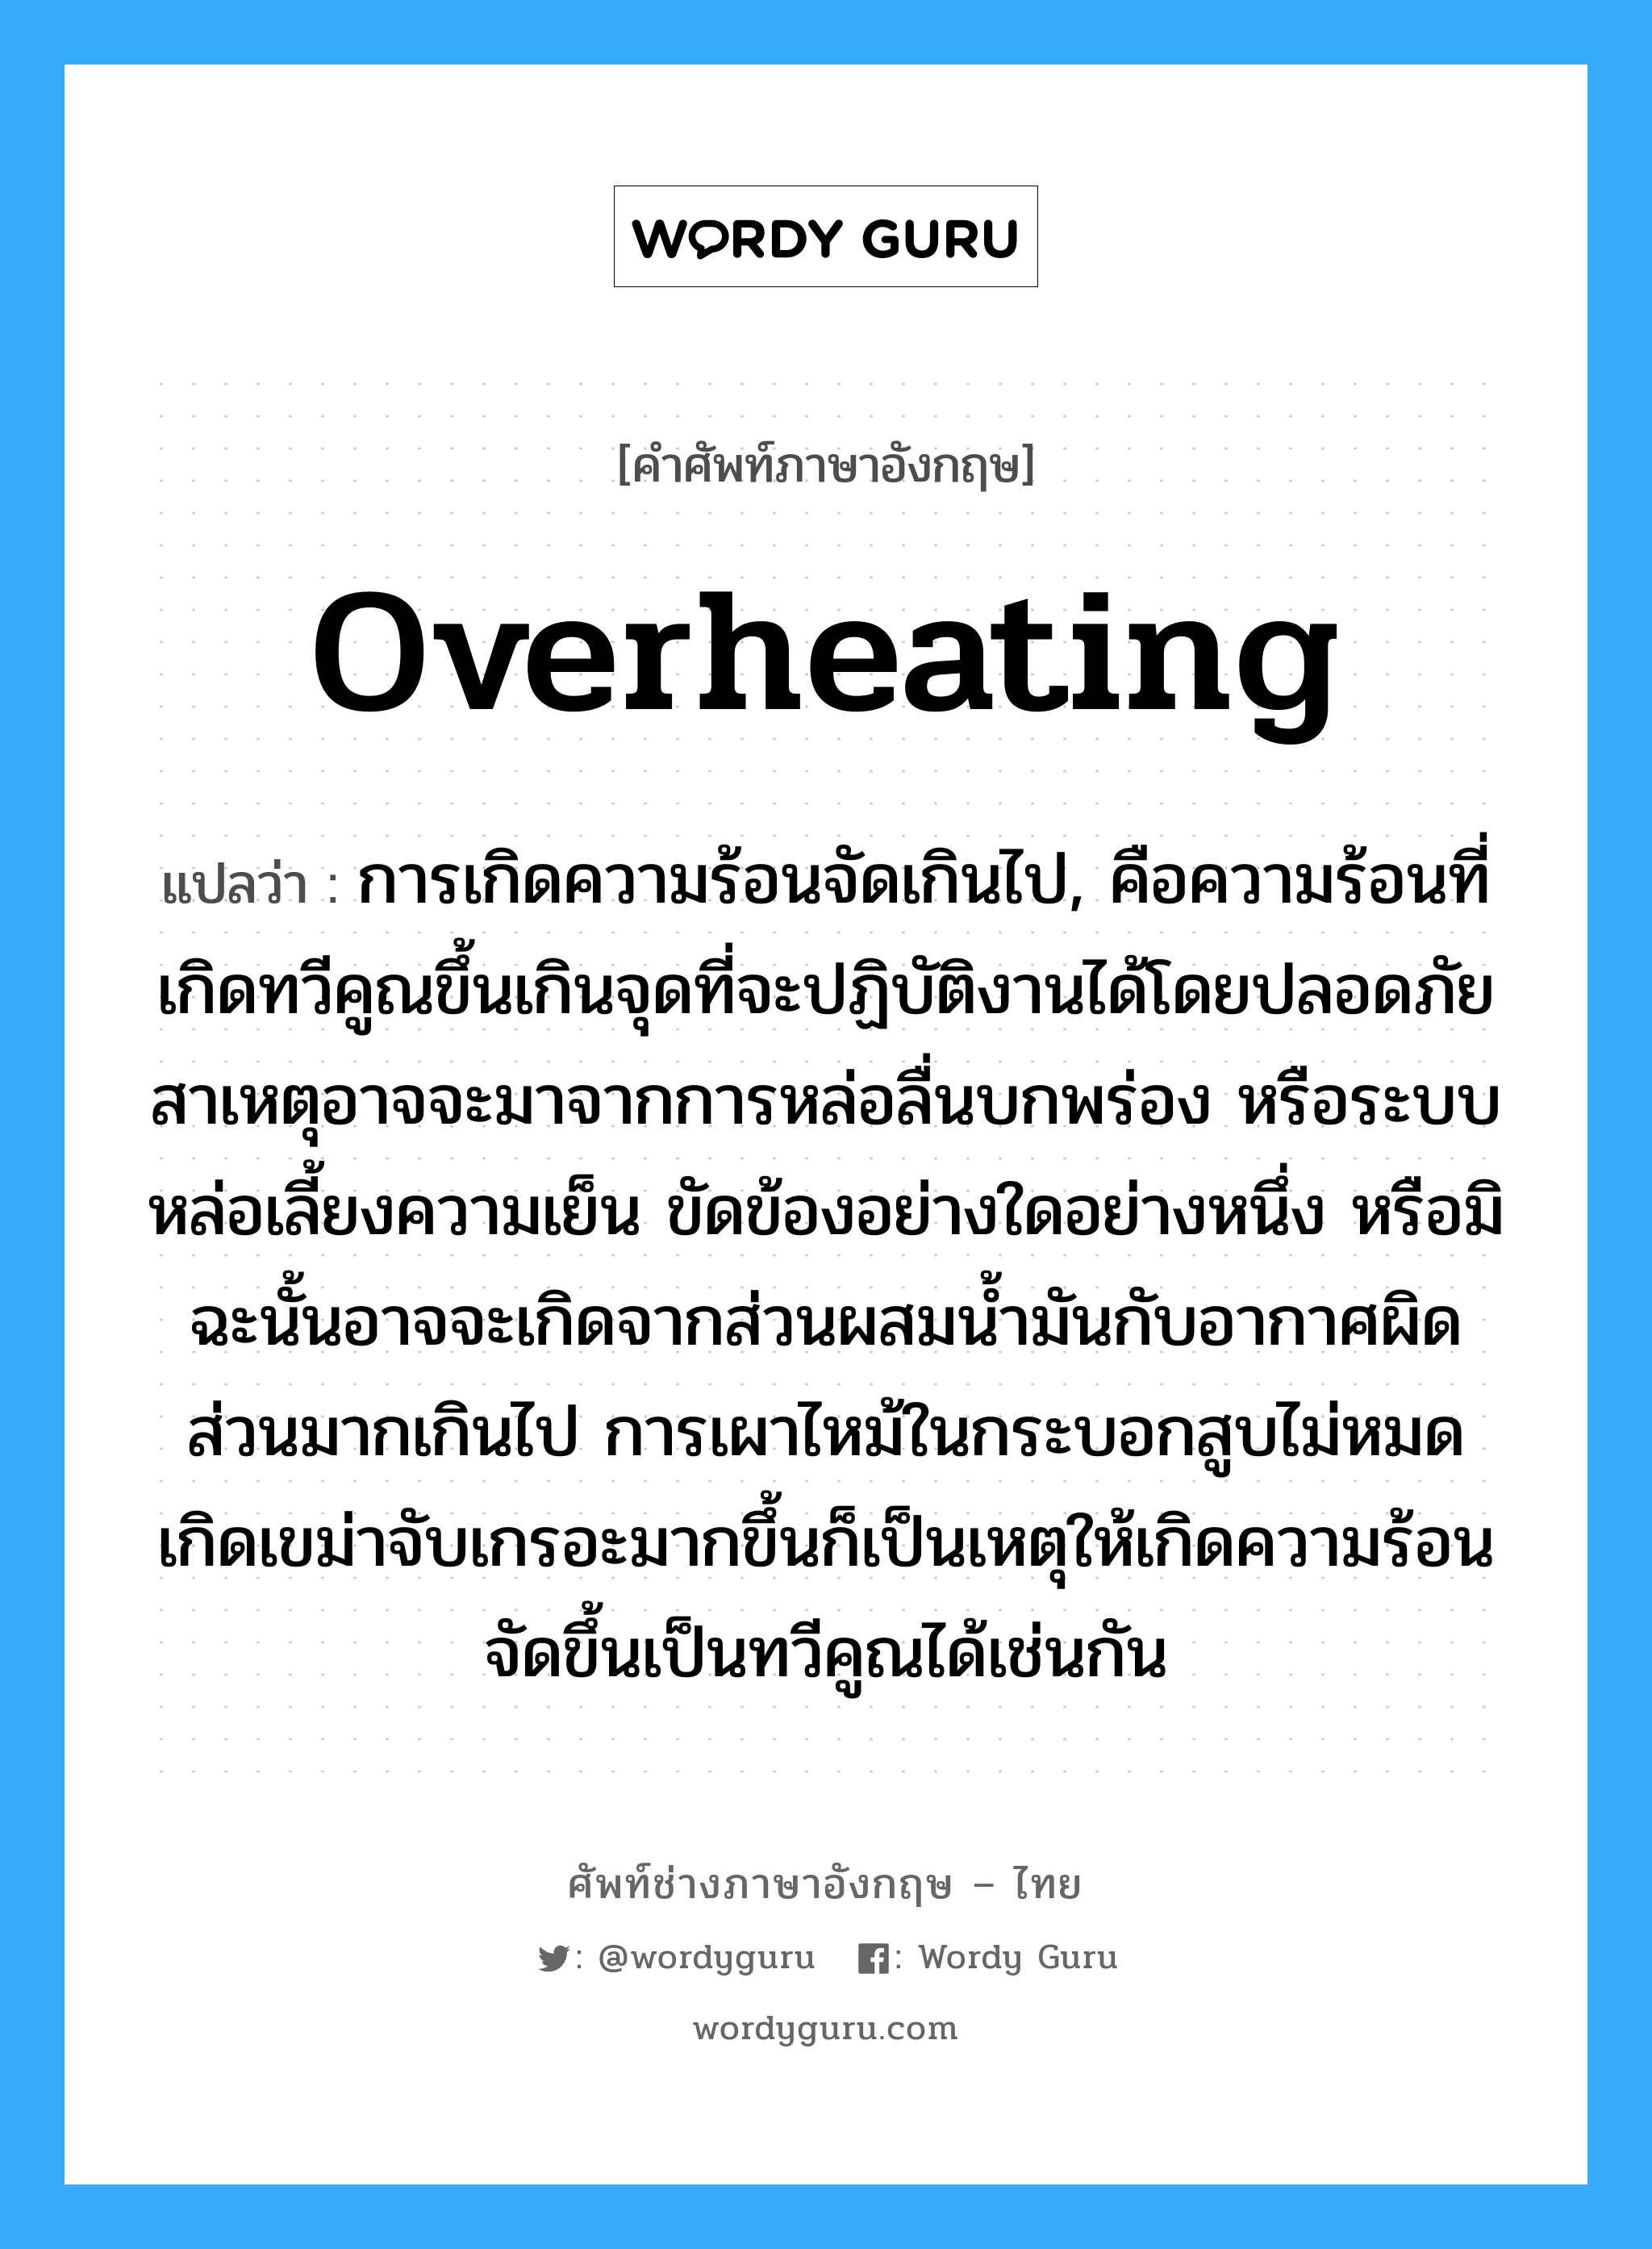 overheating แปลว่า?, คำศัพท์ช่างภาษาอังกฤษ - ไทย overheating คำศัพท์ภาษาอังกฤษ overheating แปลว่า การเกิดความร้อนจัดเกินไป, คือความร้อนที่เกิดทวีคูณขึ้นเกินจุดที่จะปฏิบัติงานได้โดยปลอดภัย สาเหตุอาจจะมาจากการหล่อลื่นบกพร่อง หรือระบบหล่อเลี้ยงความเย็น ขัดข้องอย่างใดอย่างหนึ่ง หรือมิฉะนั้นอาจจะเกิดจากส่วนผสมน้ำมันกับอากาศผิดส่วนมากเกินไป การเผาไหม้ในกระบอกสูบไม่หมดเกิดเขม่าจับเกรอะมากขึ้นก็เป็นเหตุให้เกิดความร้อนจัดขึ้นเป็นทวีคูณได้เช่นกัน